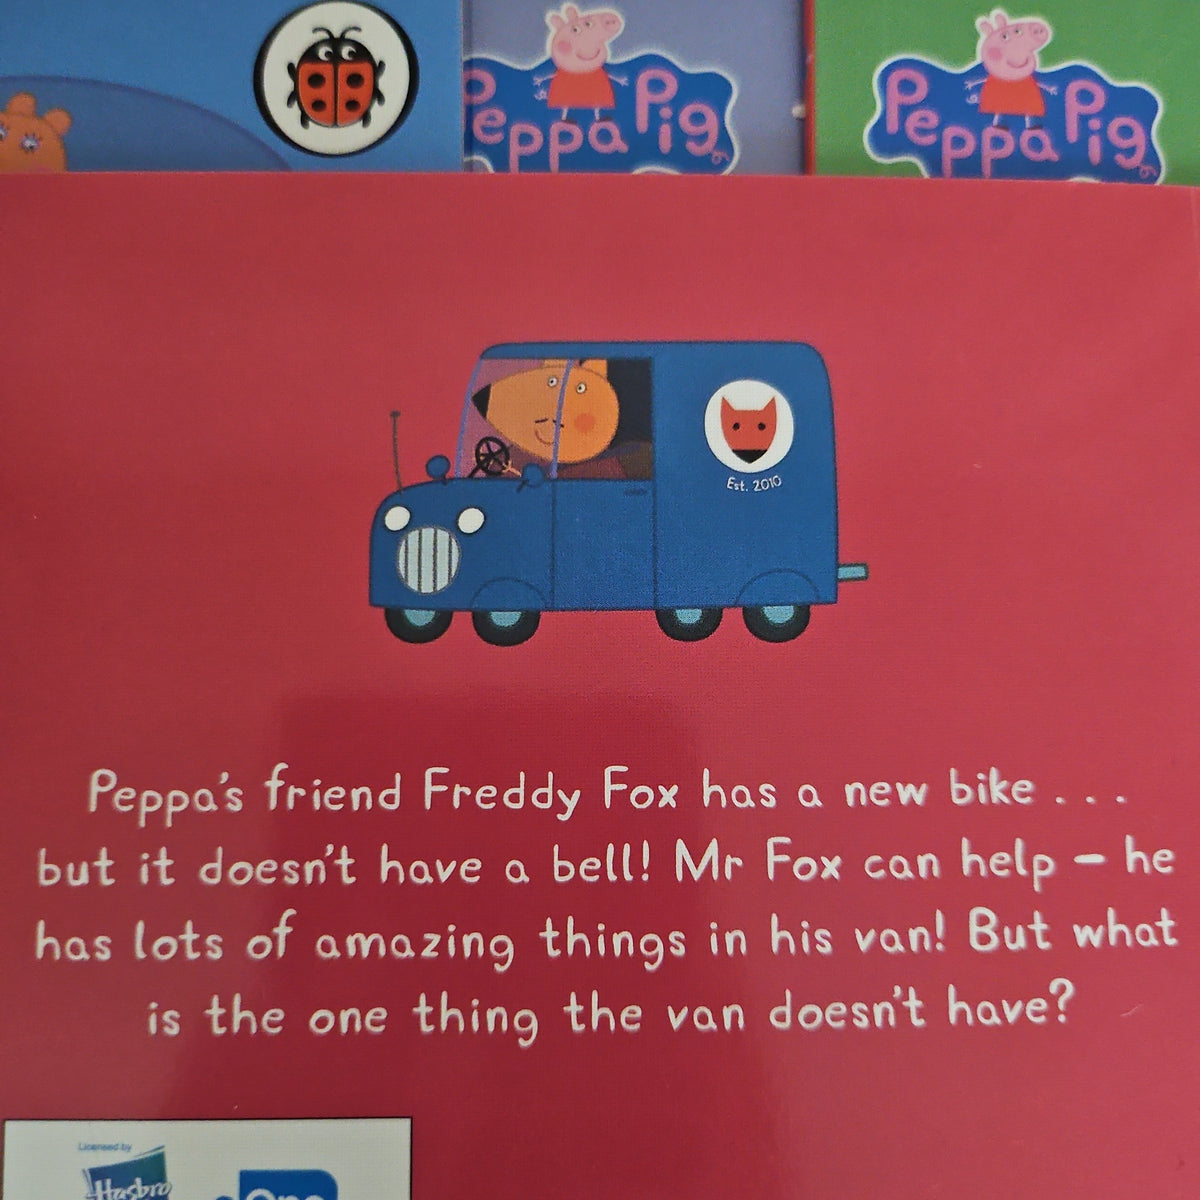 The Amazing Peppa Pig Collection:Mr Fox's Van